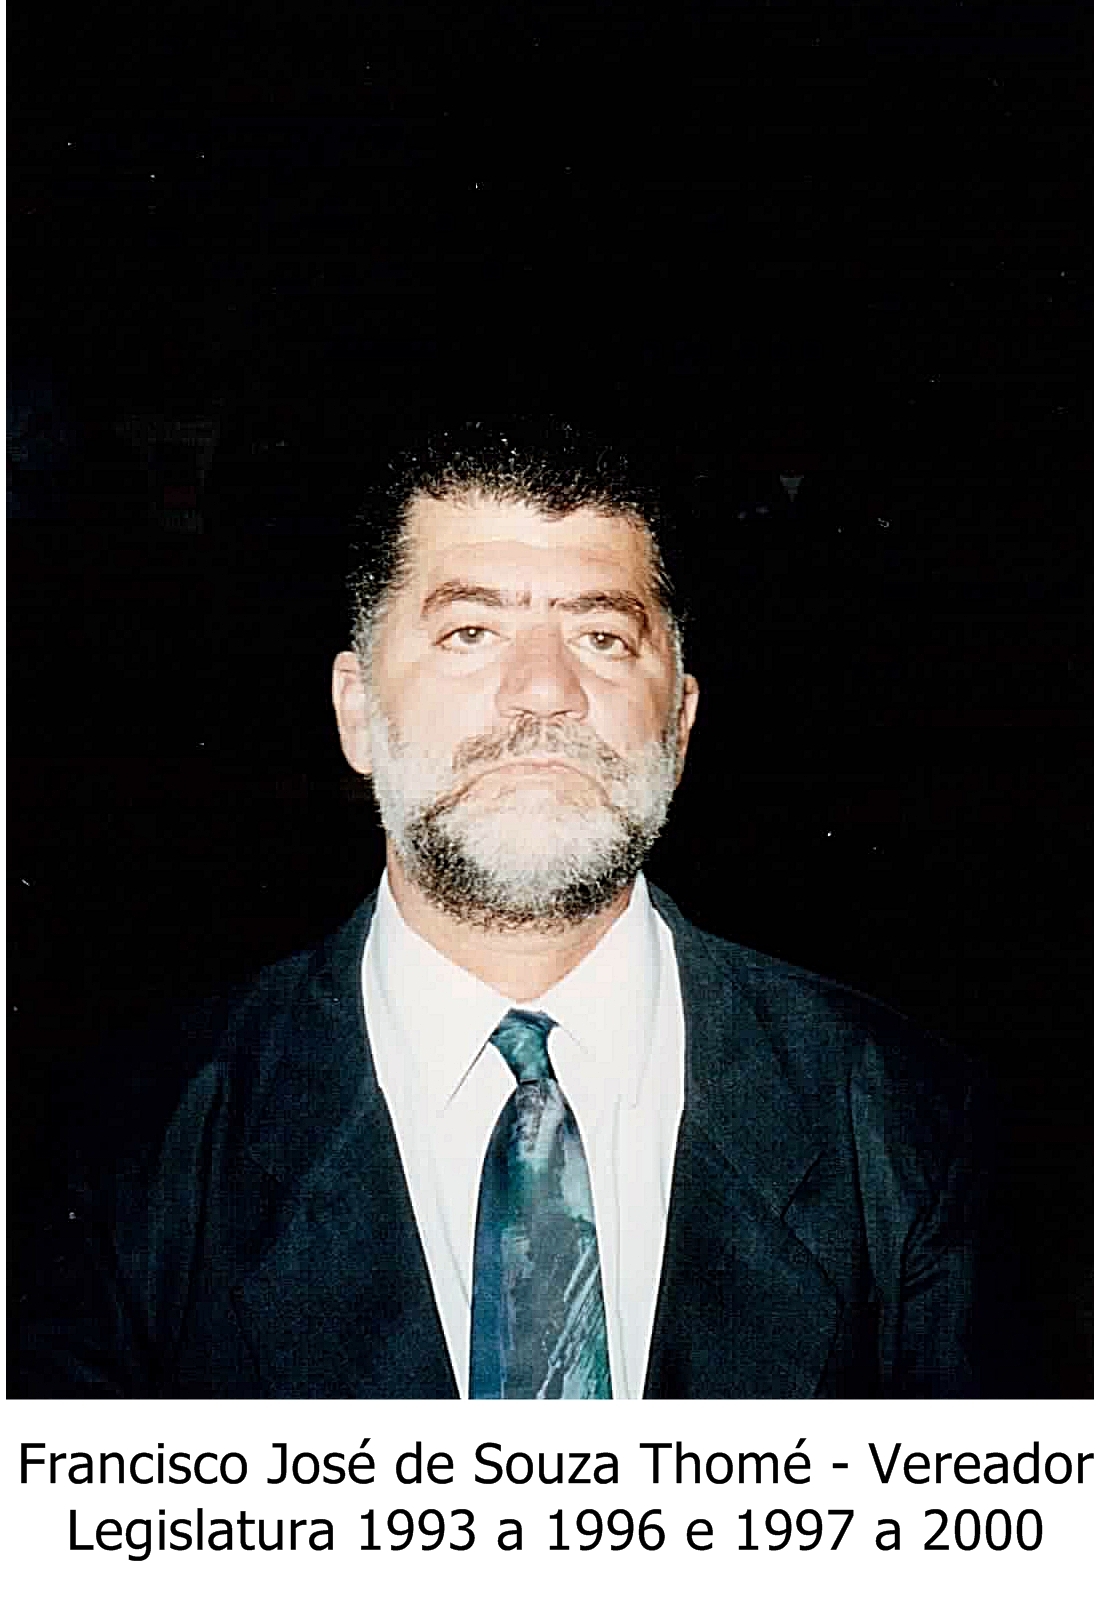 Francisco José de Souza Thomé